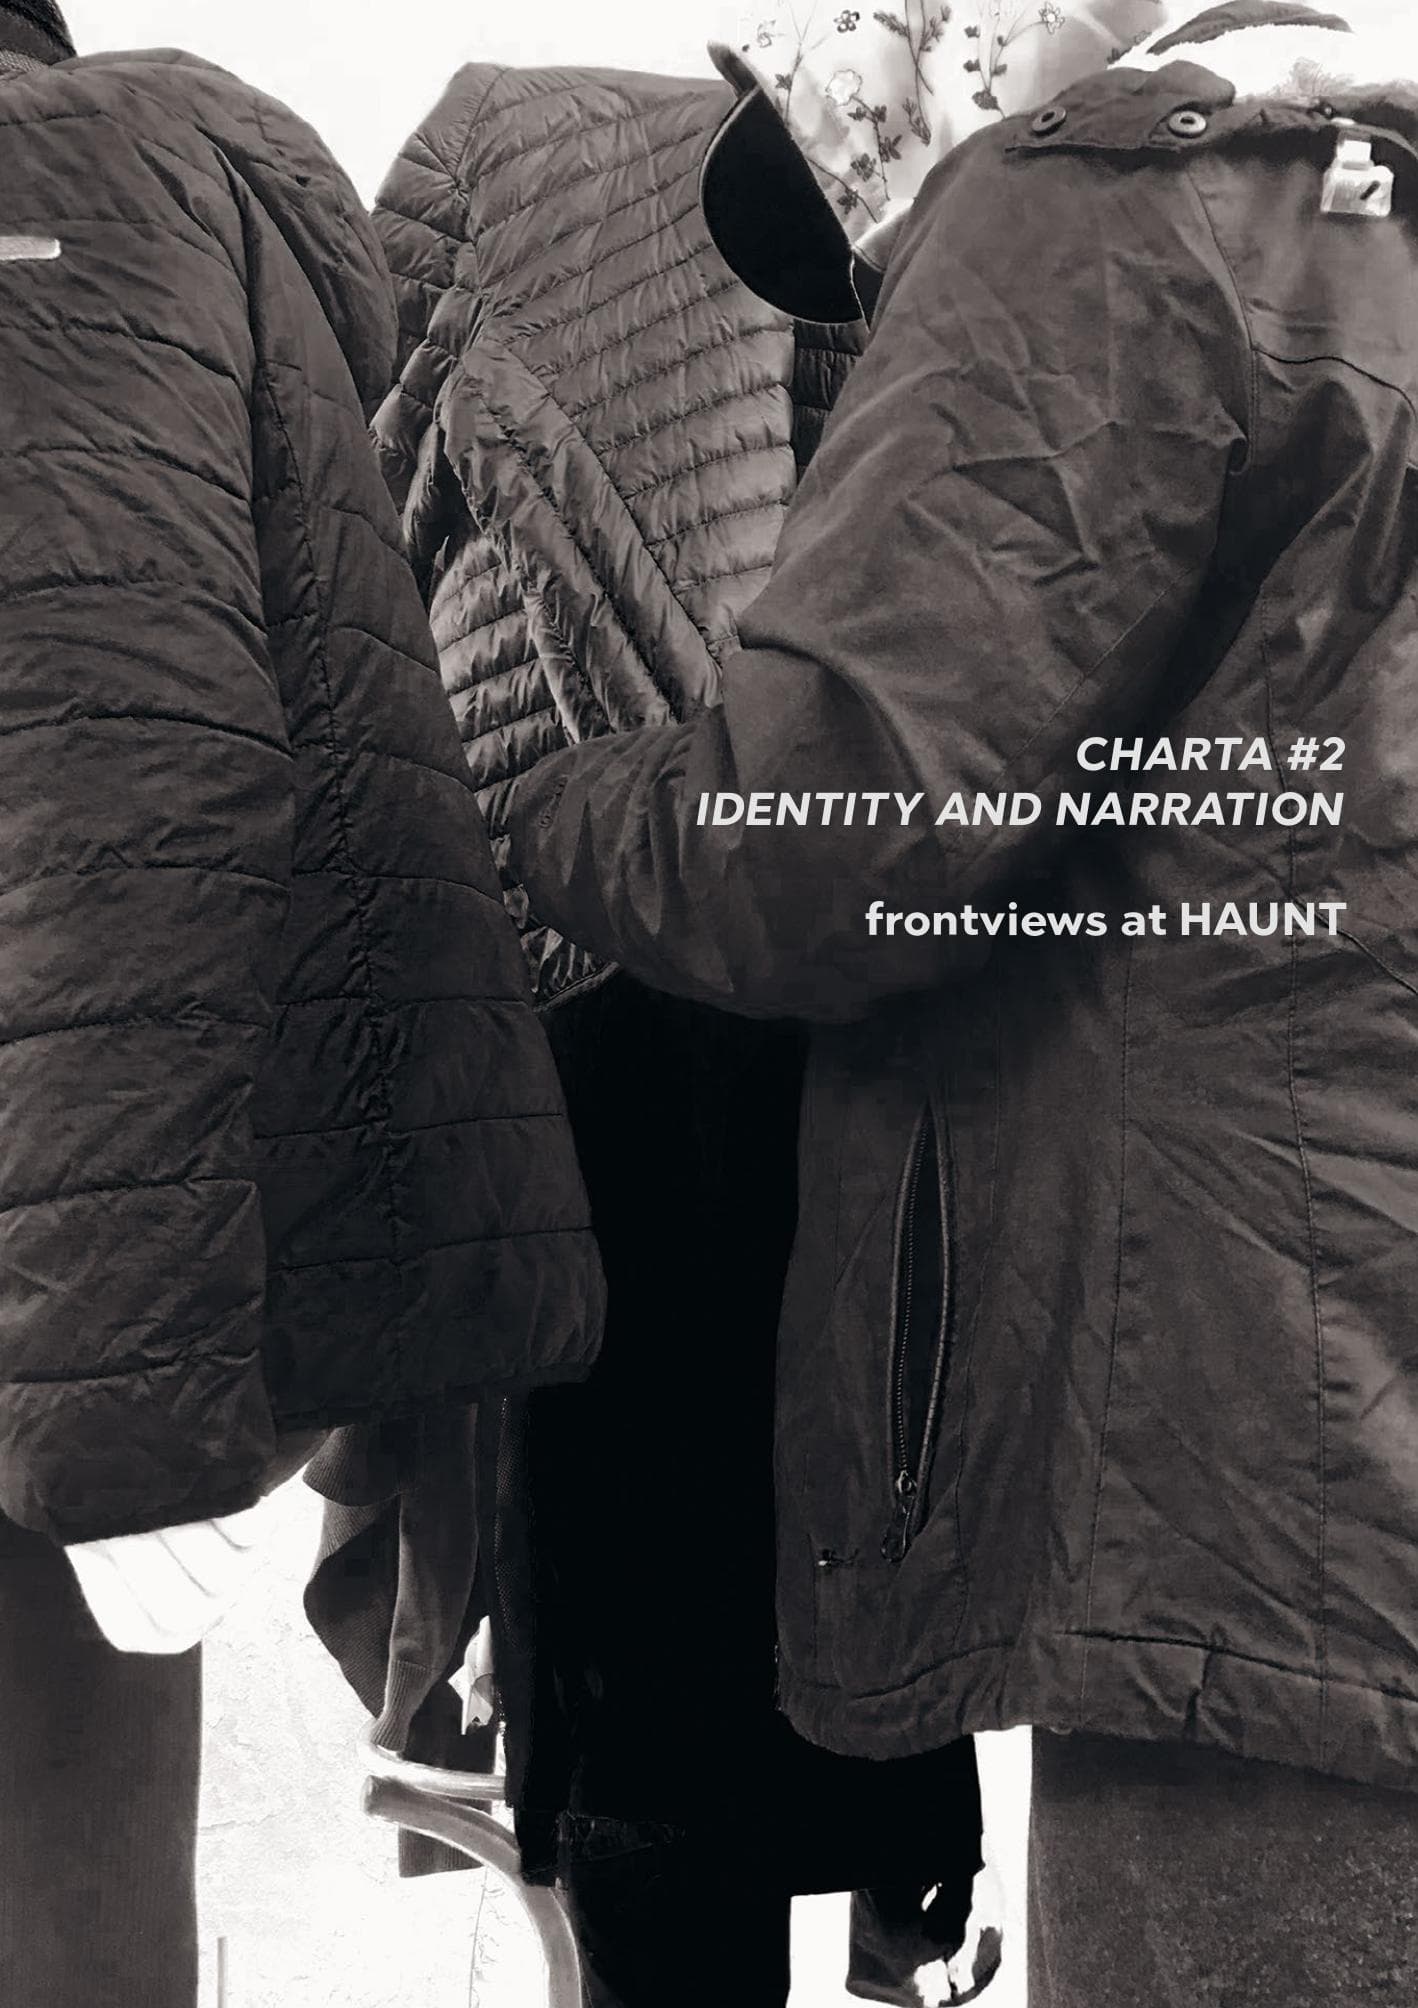 Ausstellung "CHARTA#2 - Identity and Narration" im HAUNT